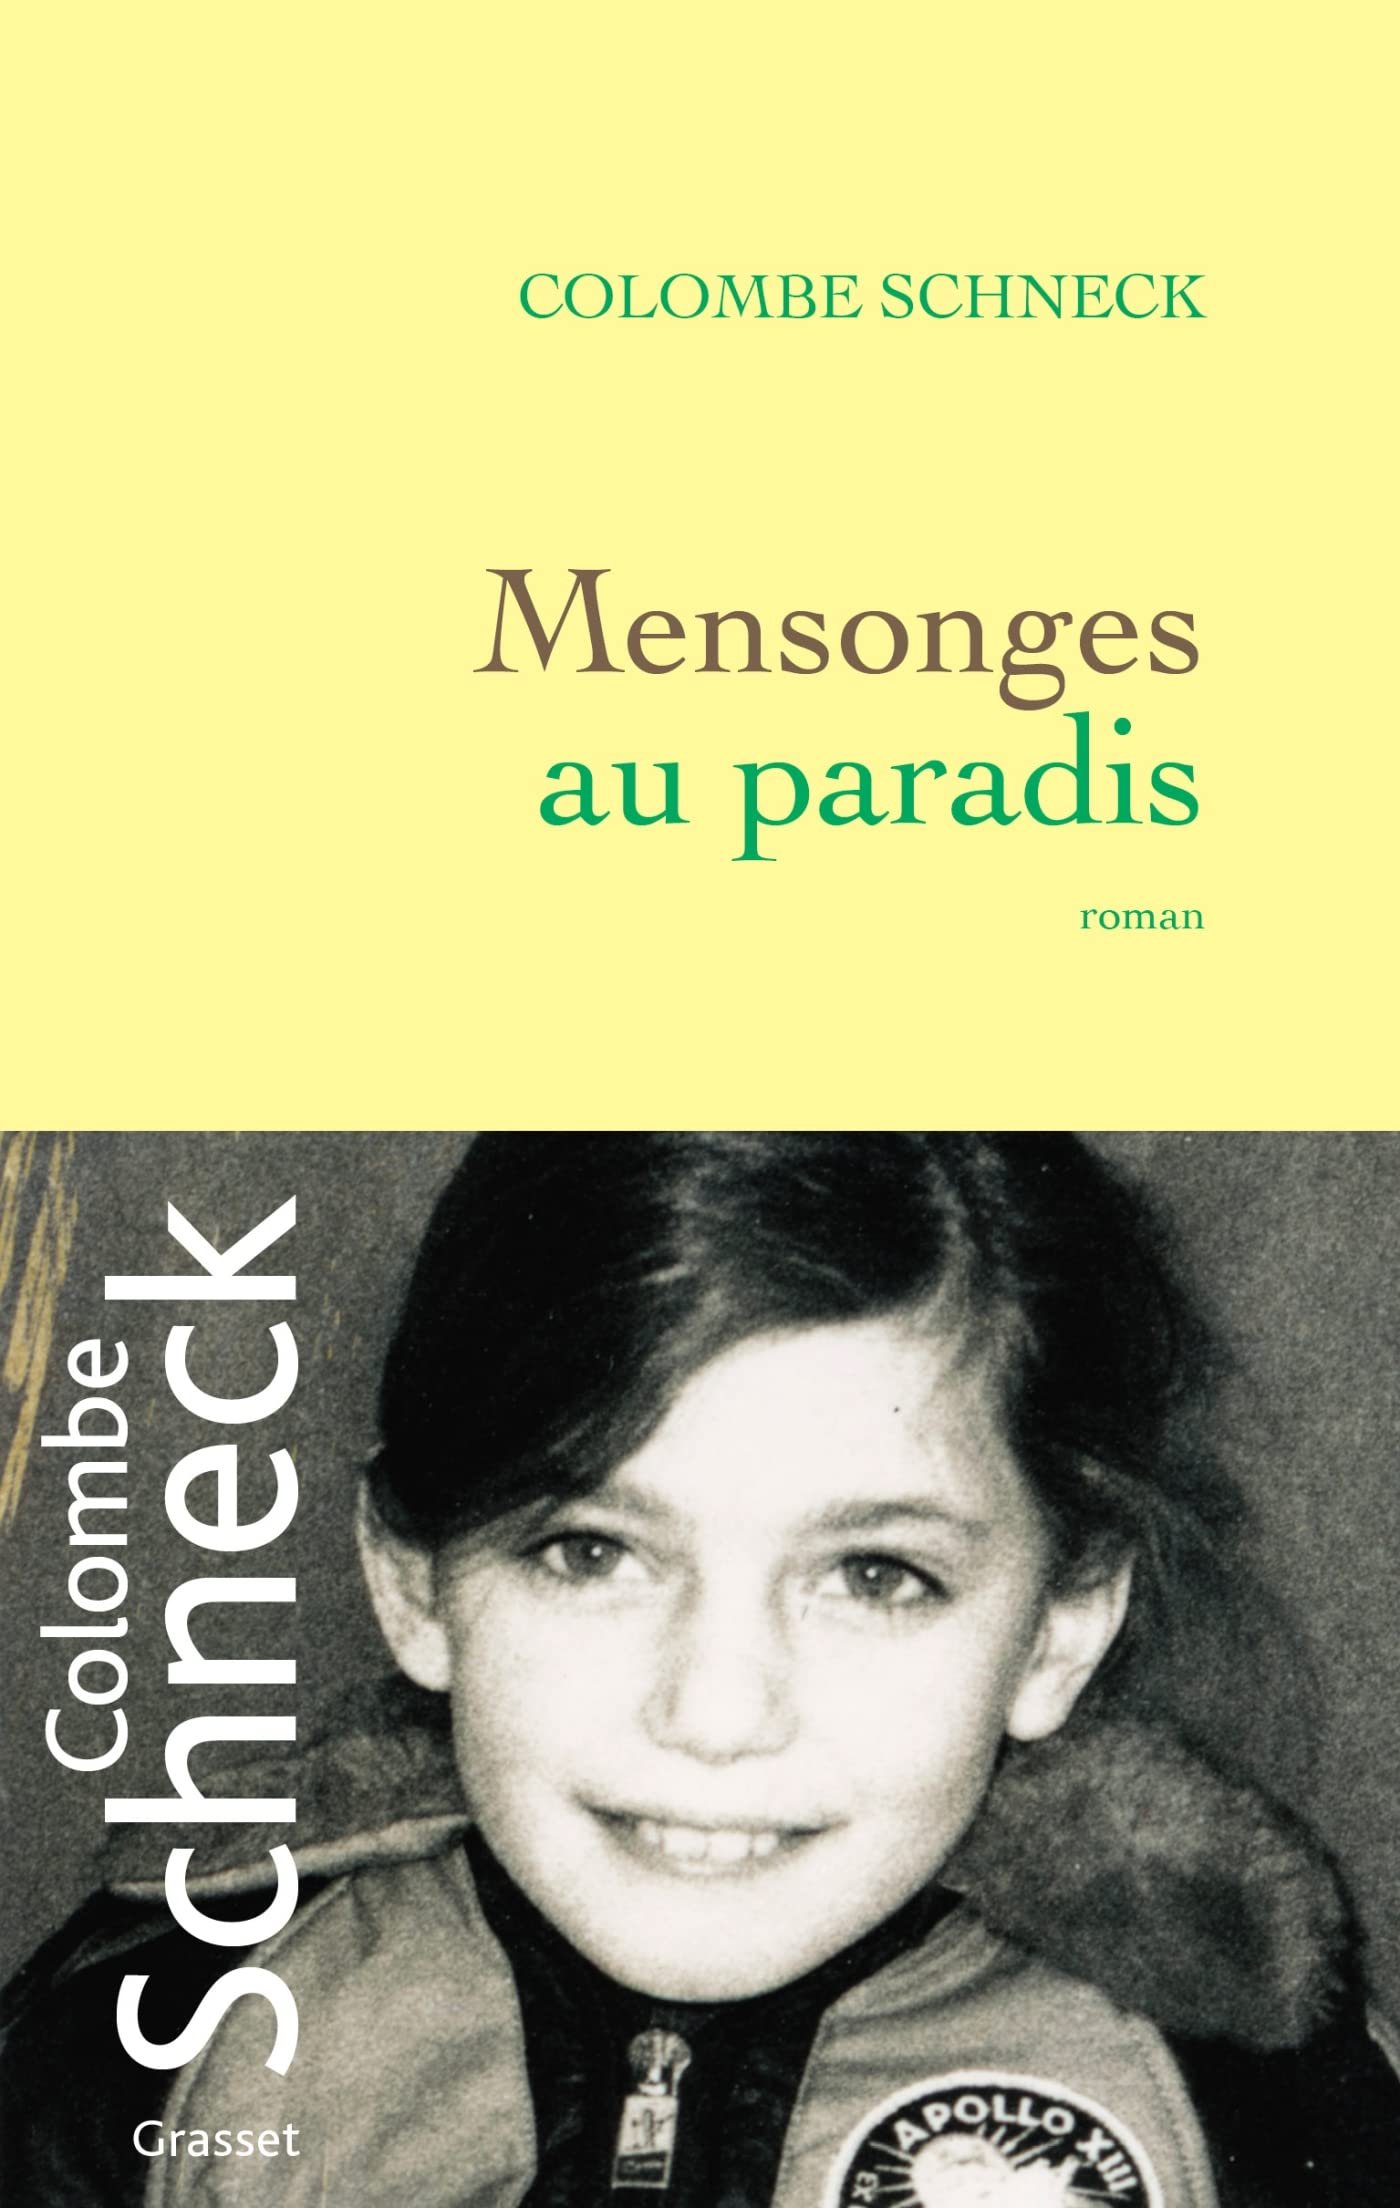 Colombe Schneck – Mensonges au paradis